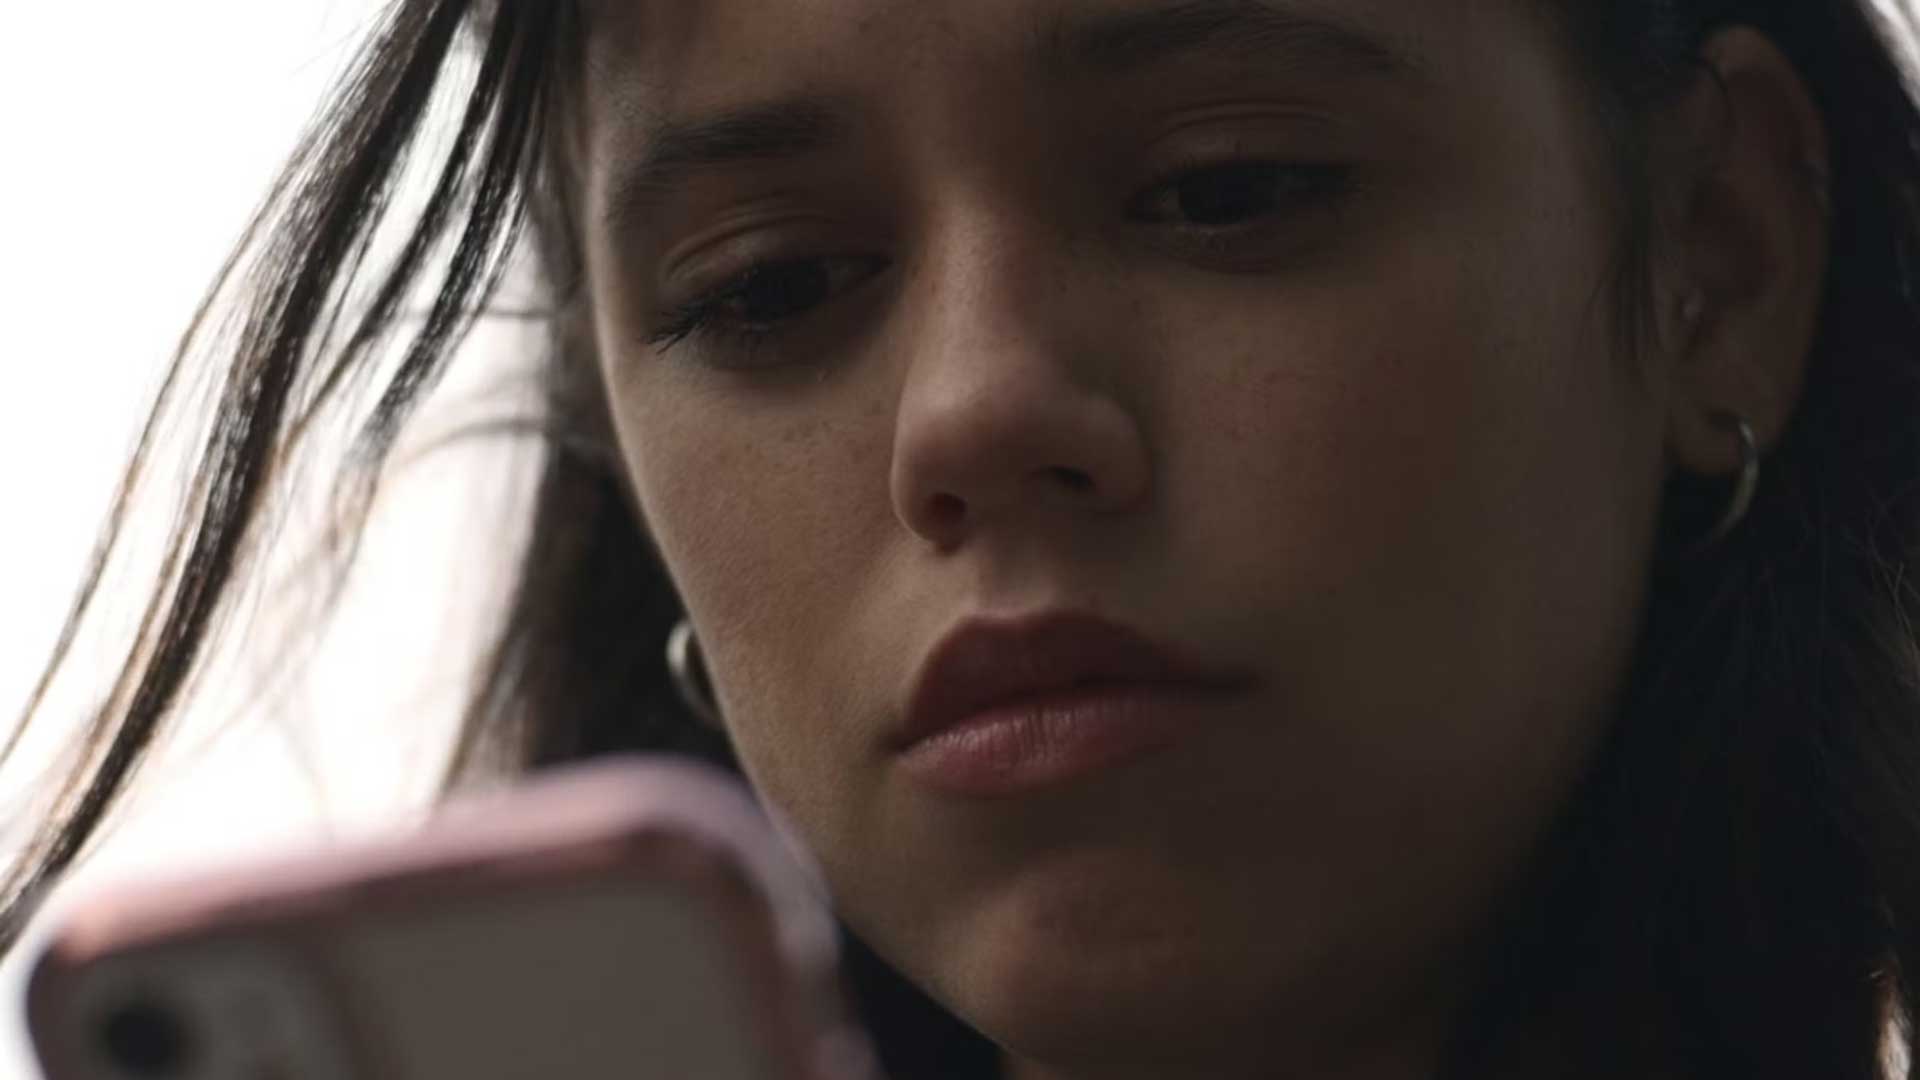 نگاه جنا اورتگا به موبایل در فیلم The Fallout (فال اوت)، محصول سال ۲۰۲۱ میلادی